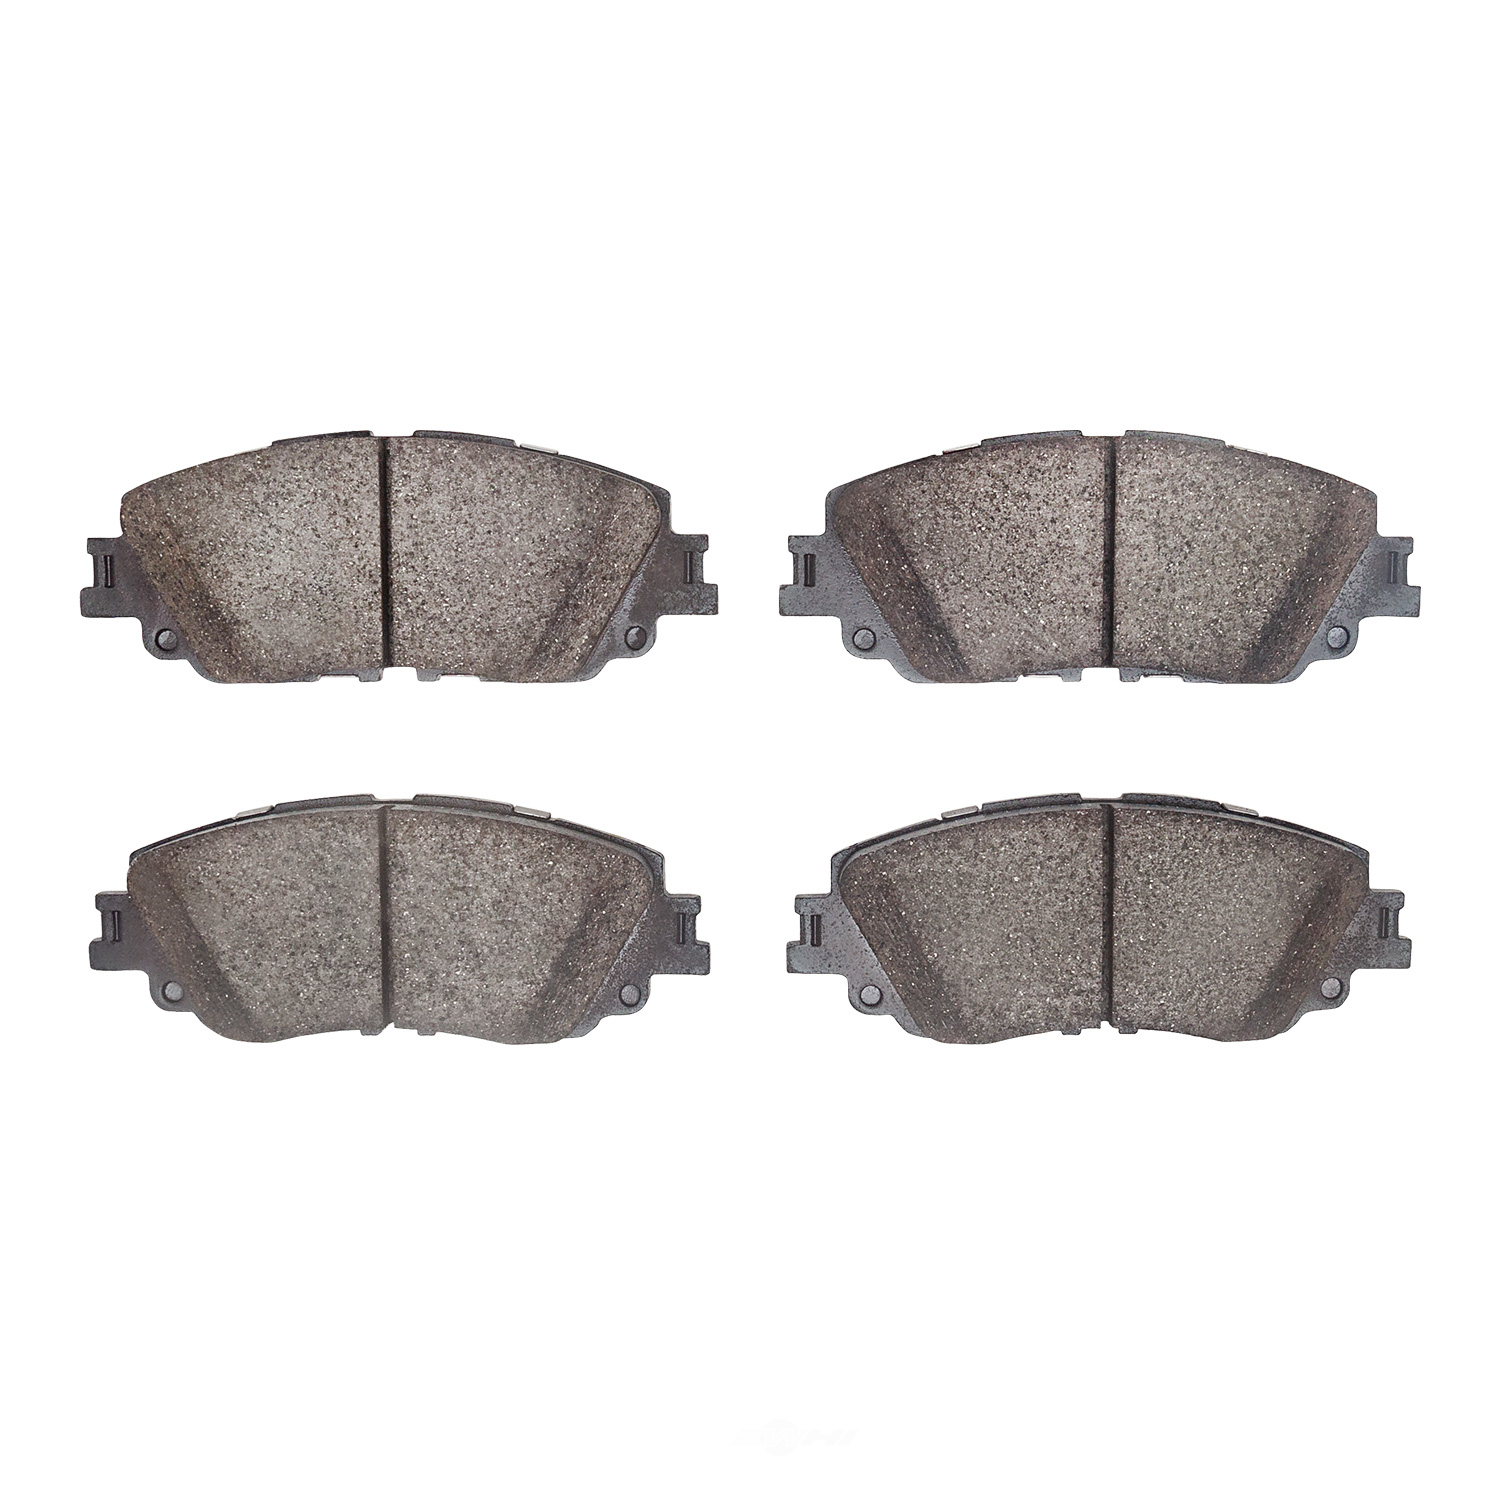 DFC - DFC 5000 Advanced Brake Pads - Ceramic (Front) - DF1 1551-2076-00